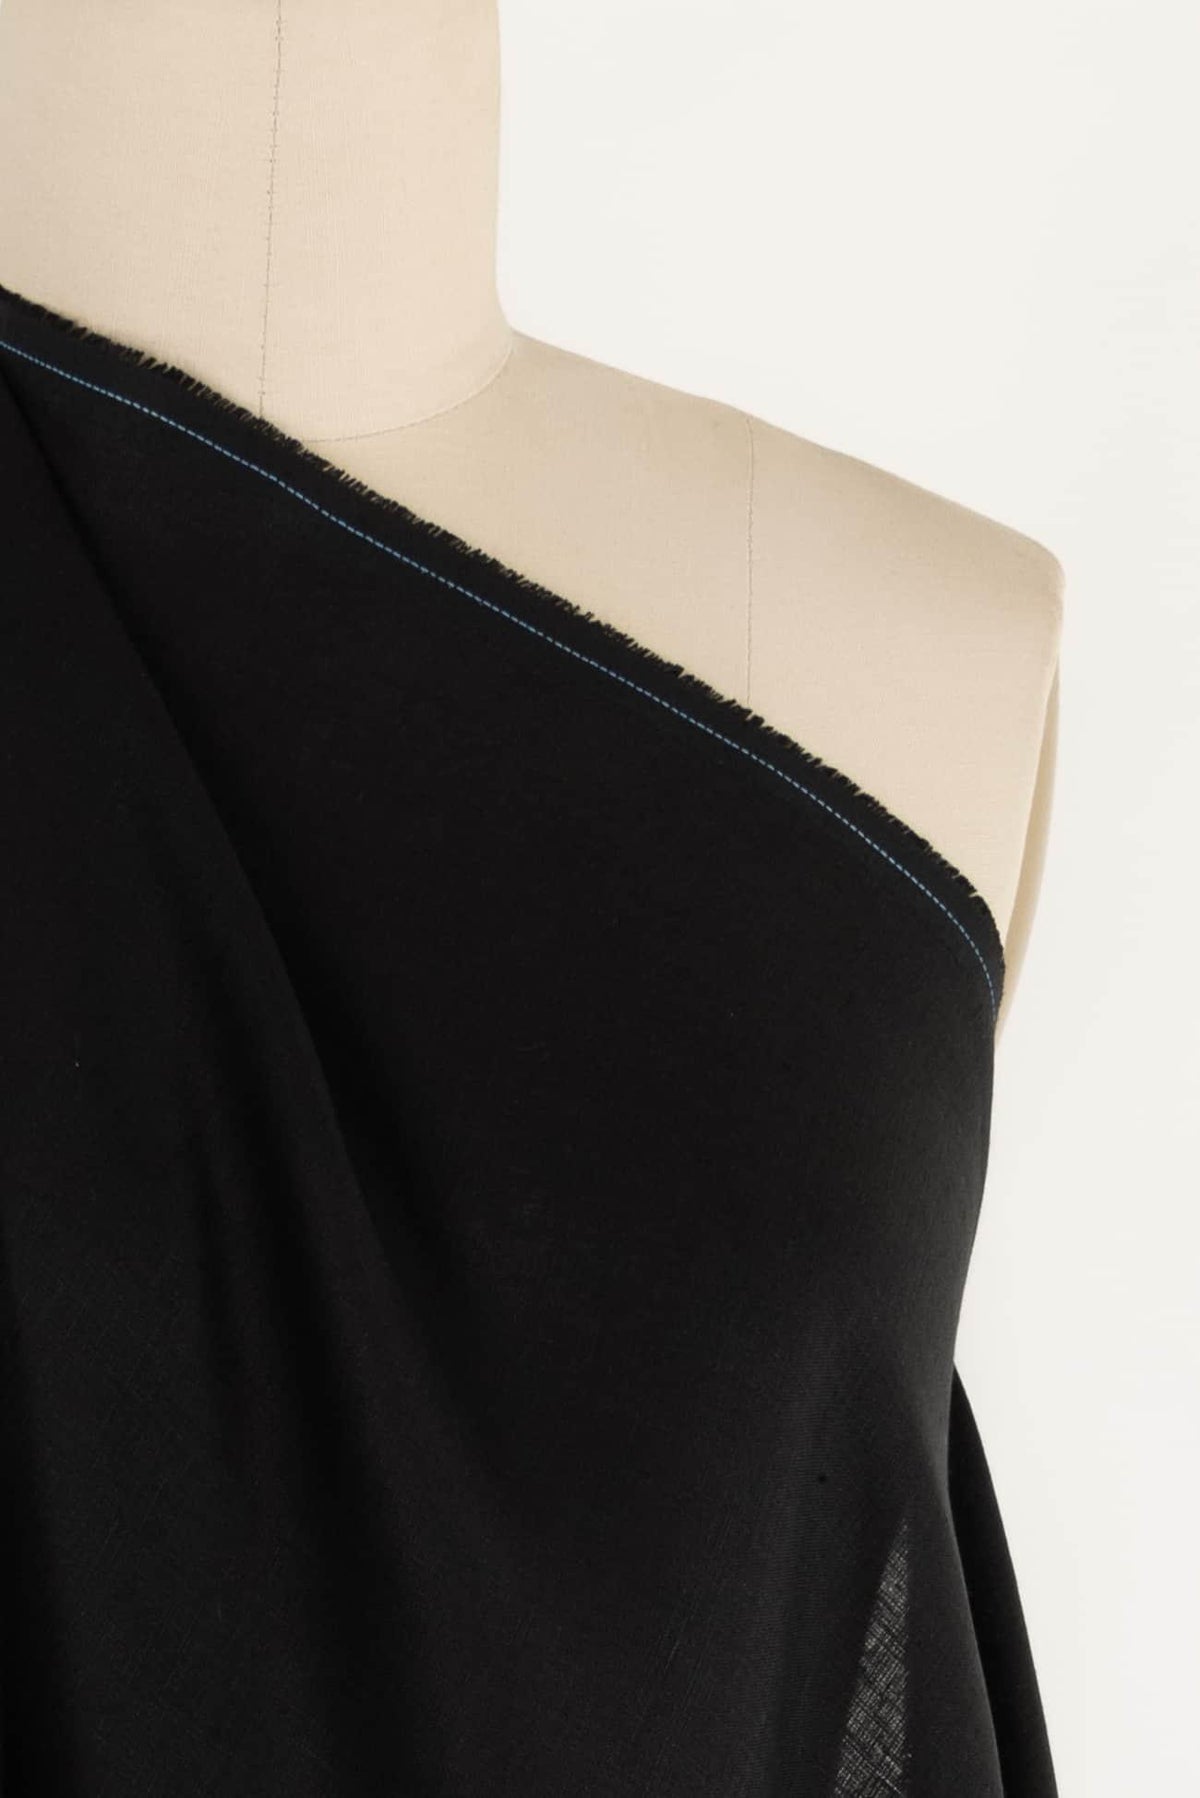 Black Hanky Linen Woven - Marcy Tilton Fabrics